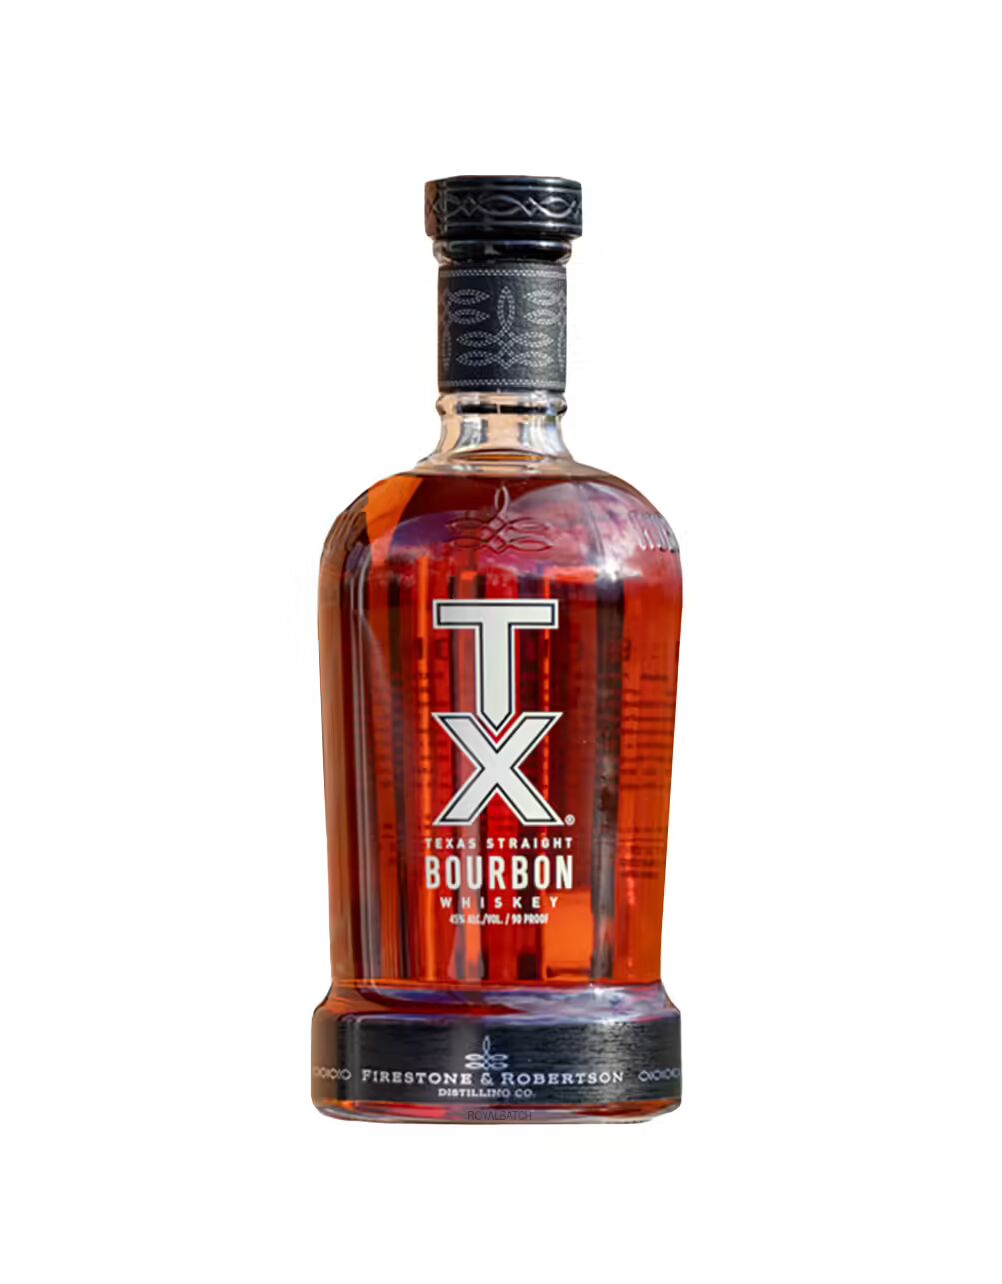 TX Straight Bourbon Whiskey